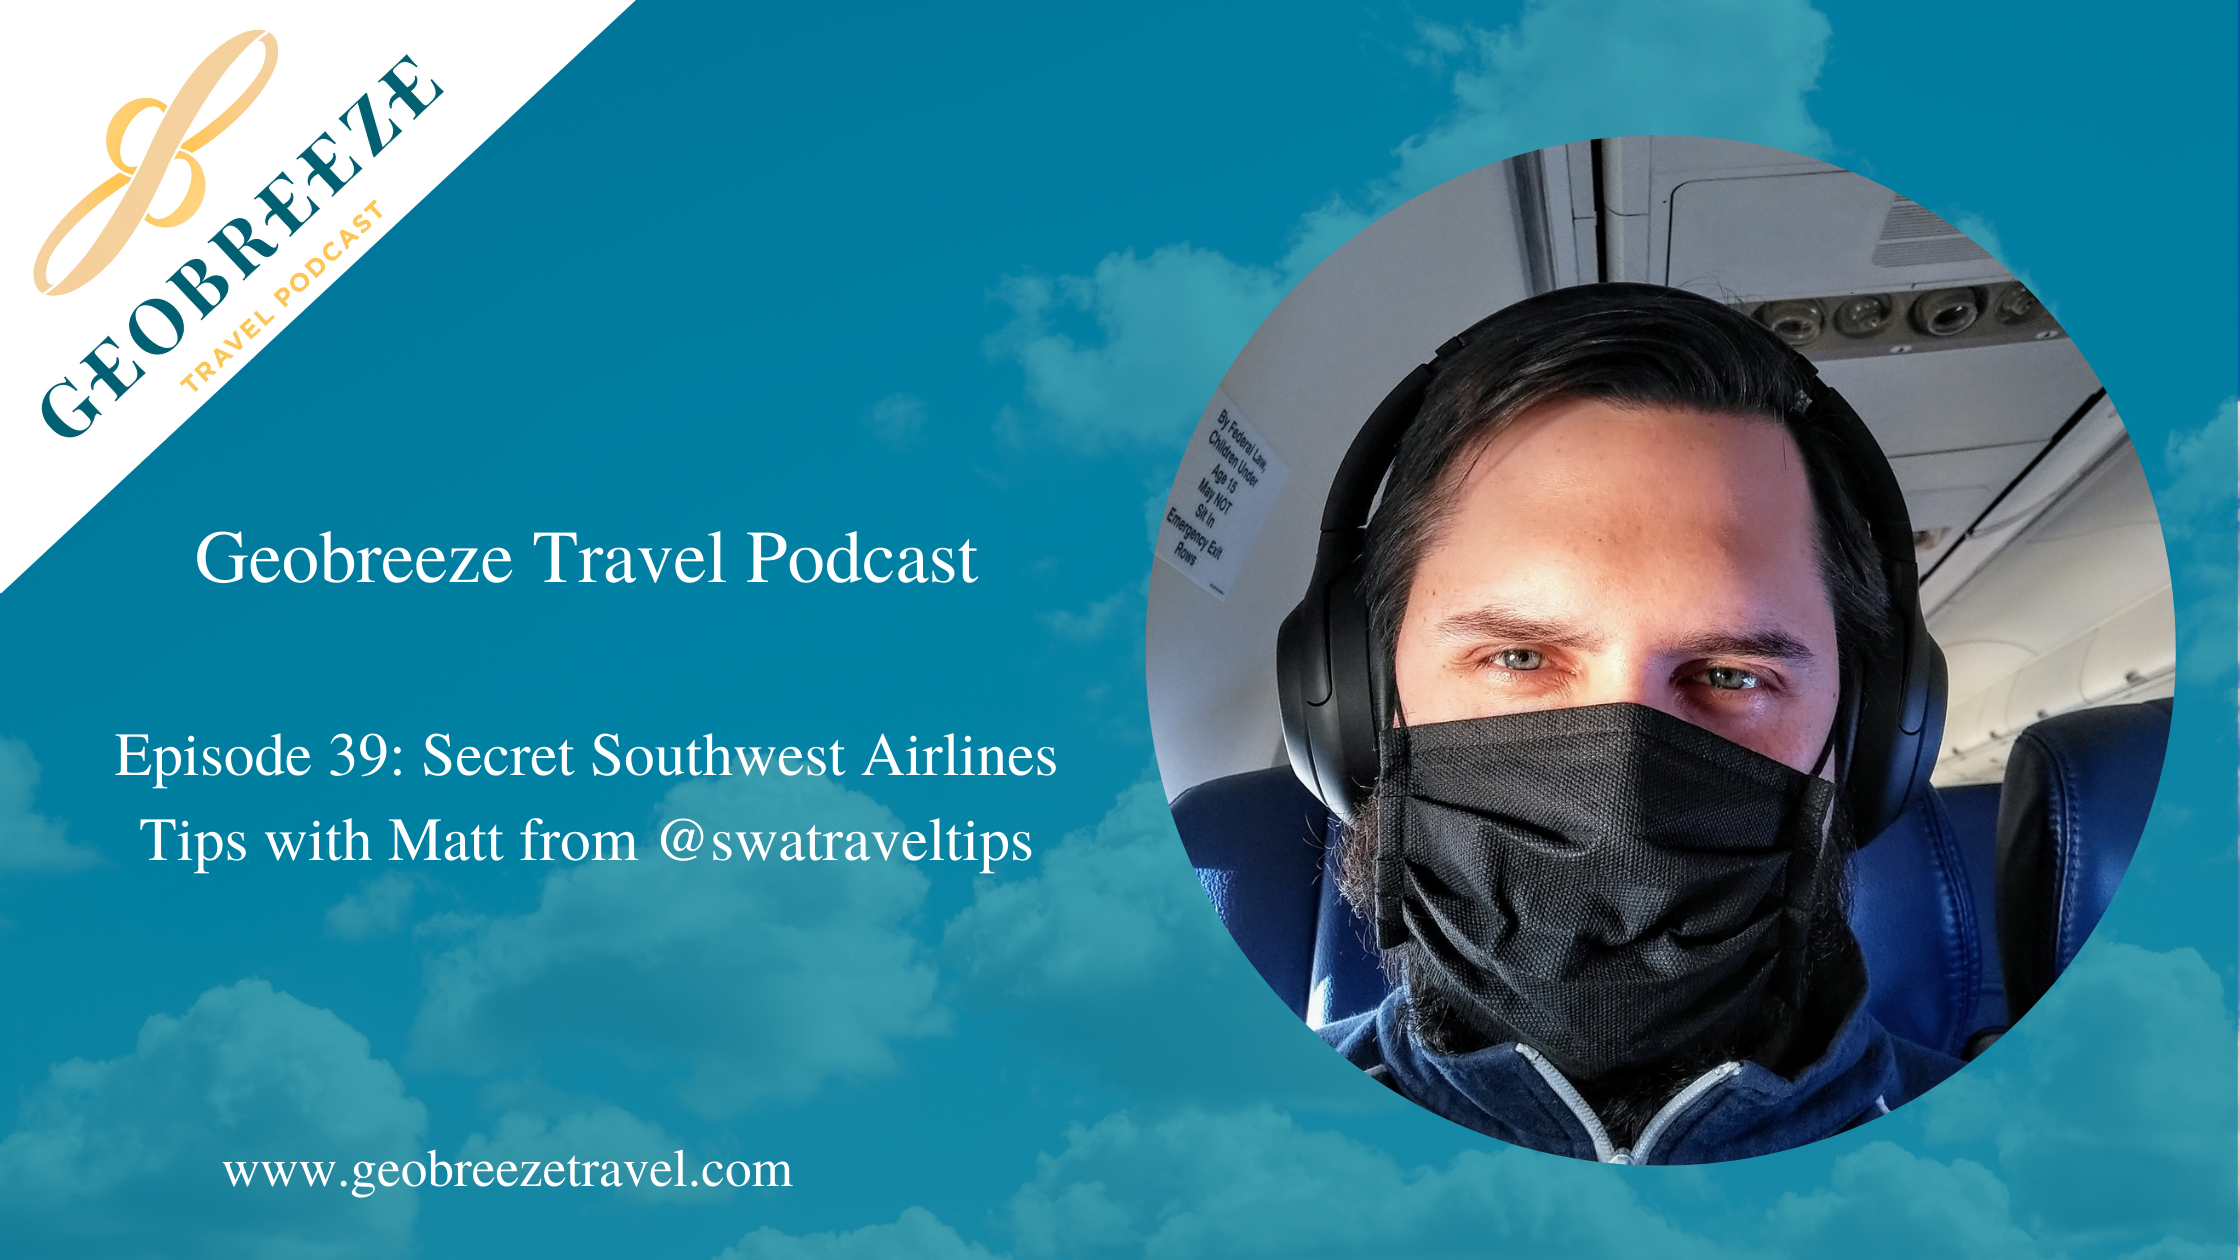 Episode 39: Secret Southwest Airlines Travel Tips with Matt from @swatraveltips